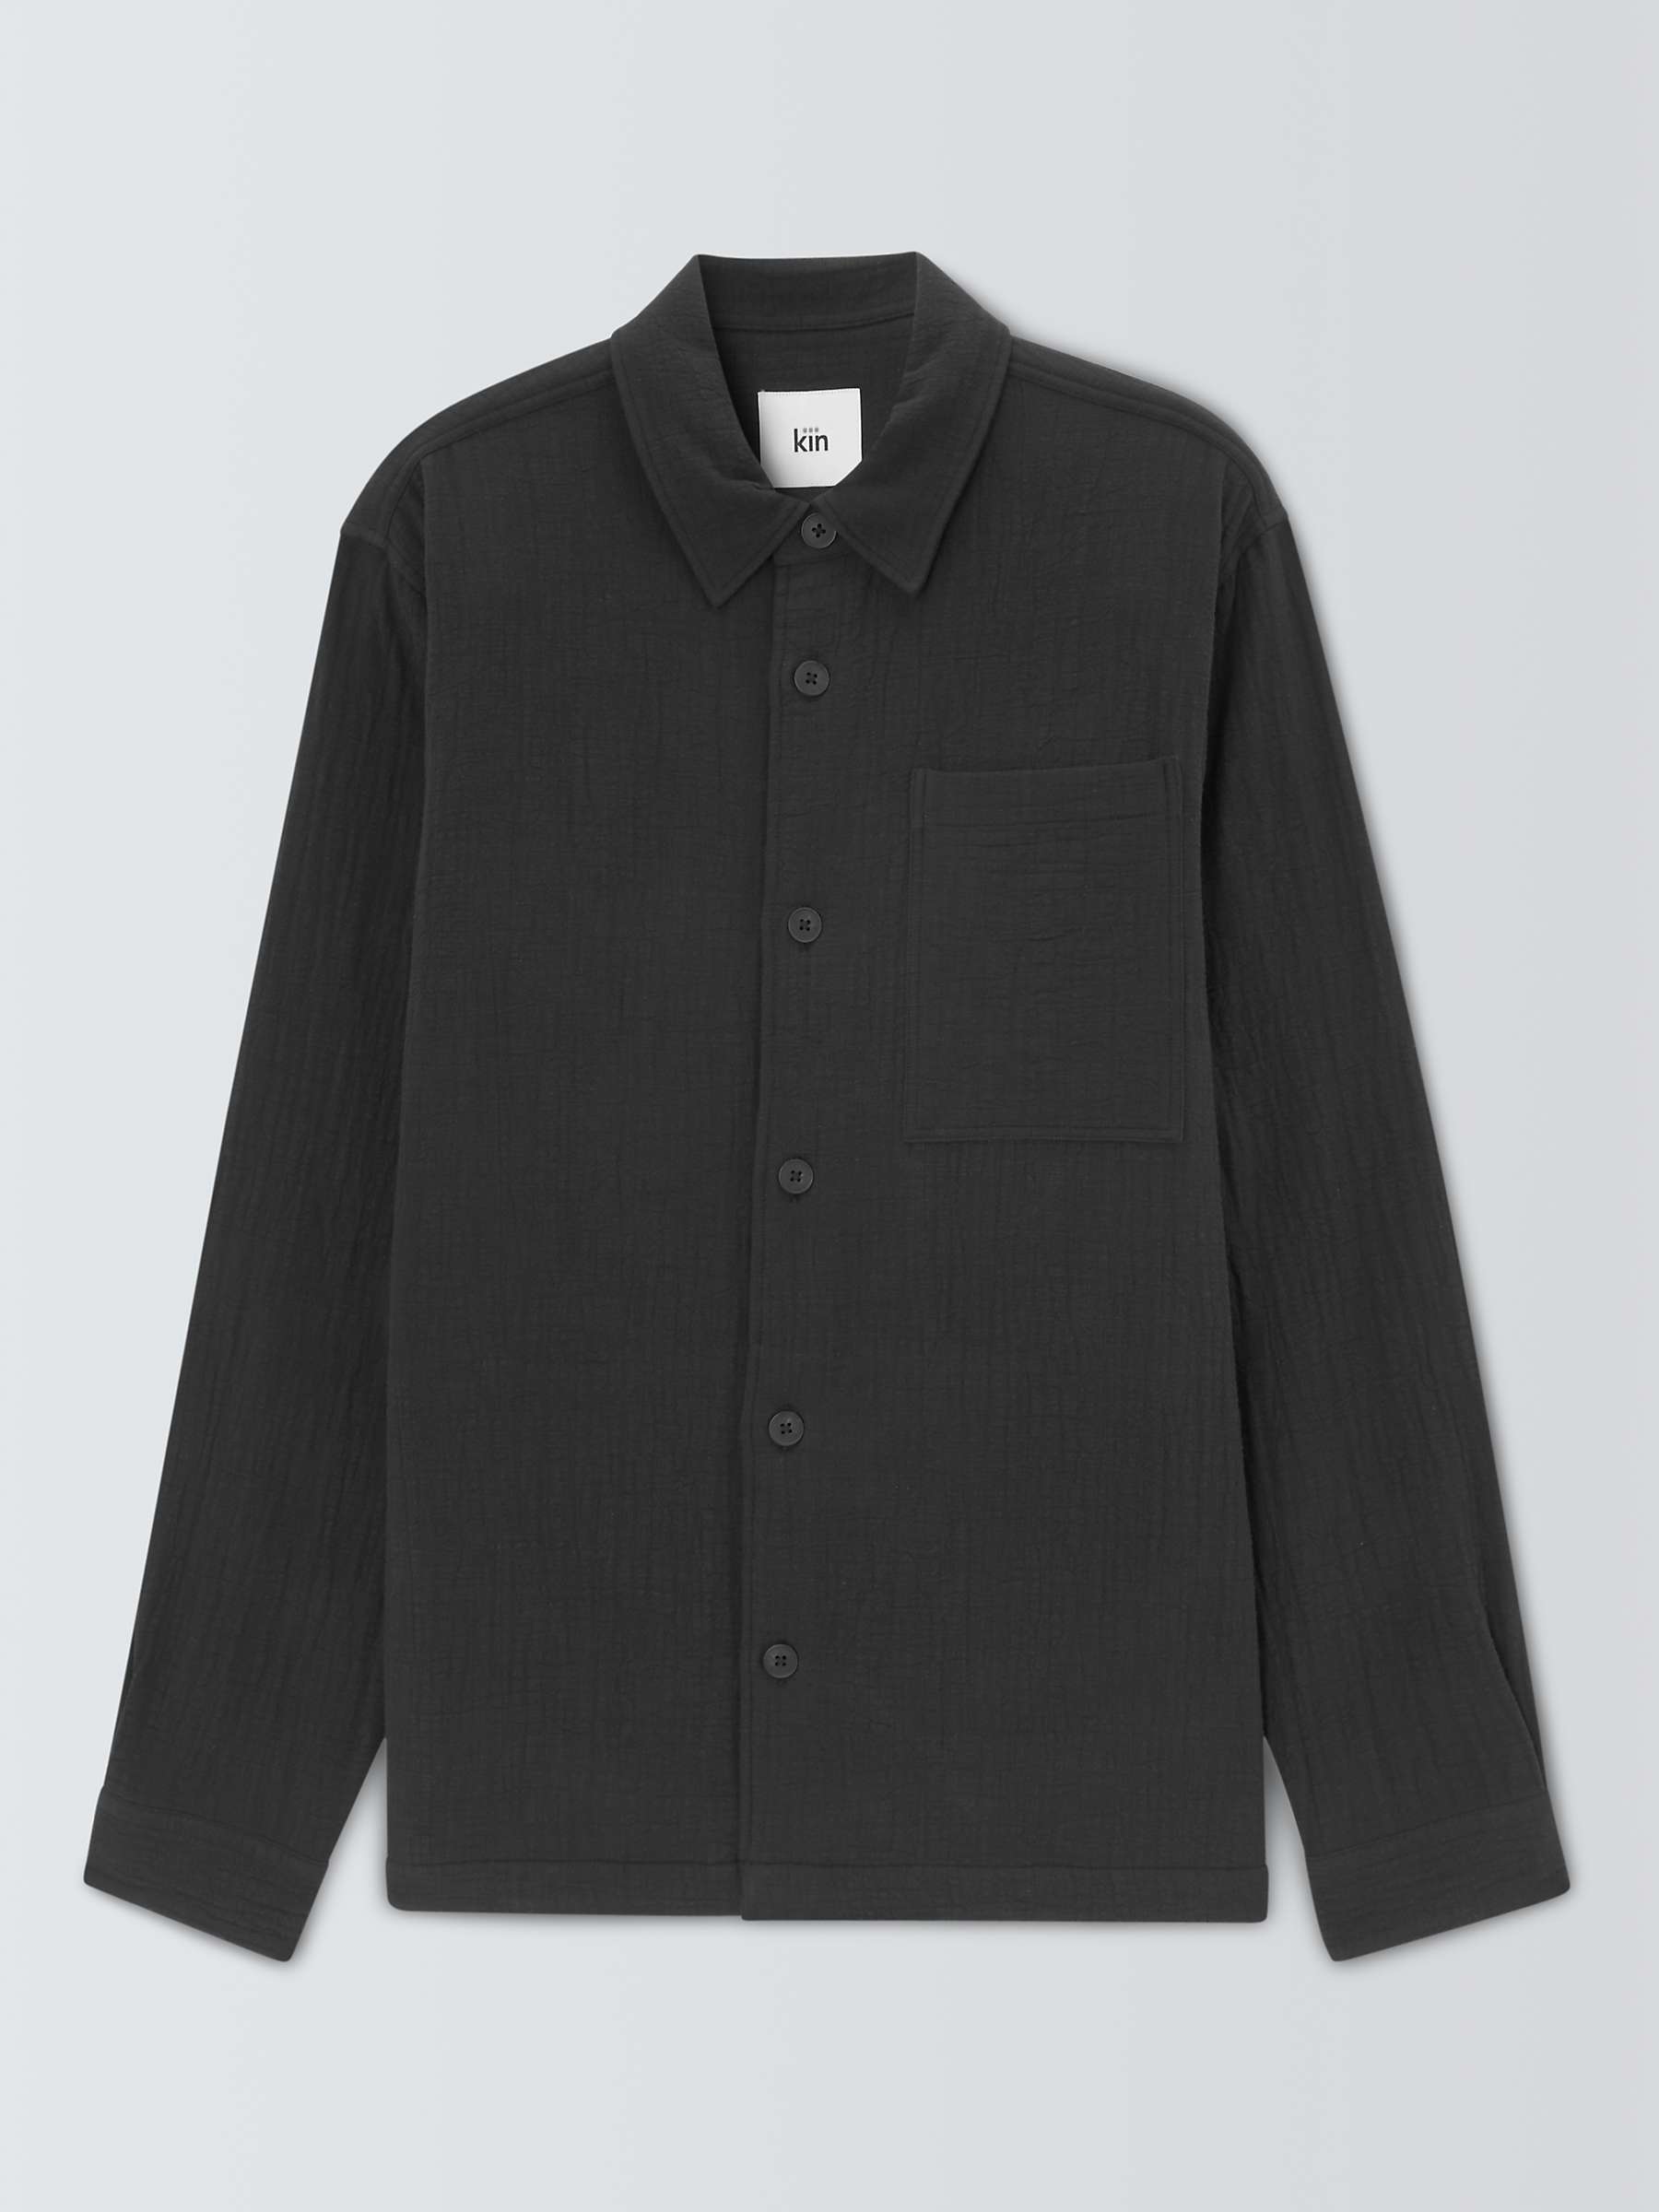 Buy Kin Cotton Long Sleeve Textured Overshirt, Black Beauty Online at johnlewis.com